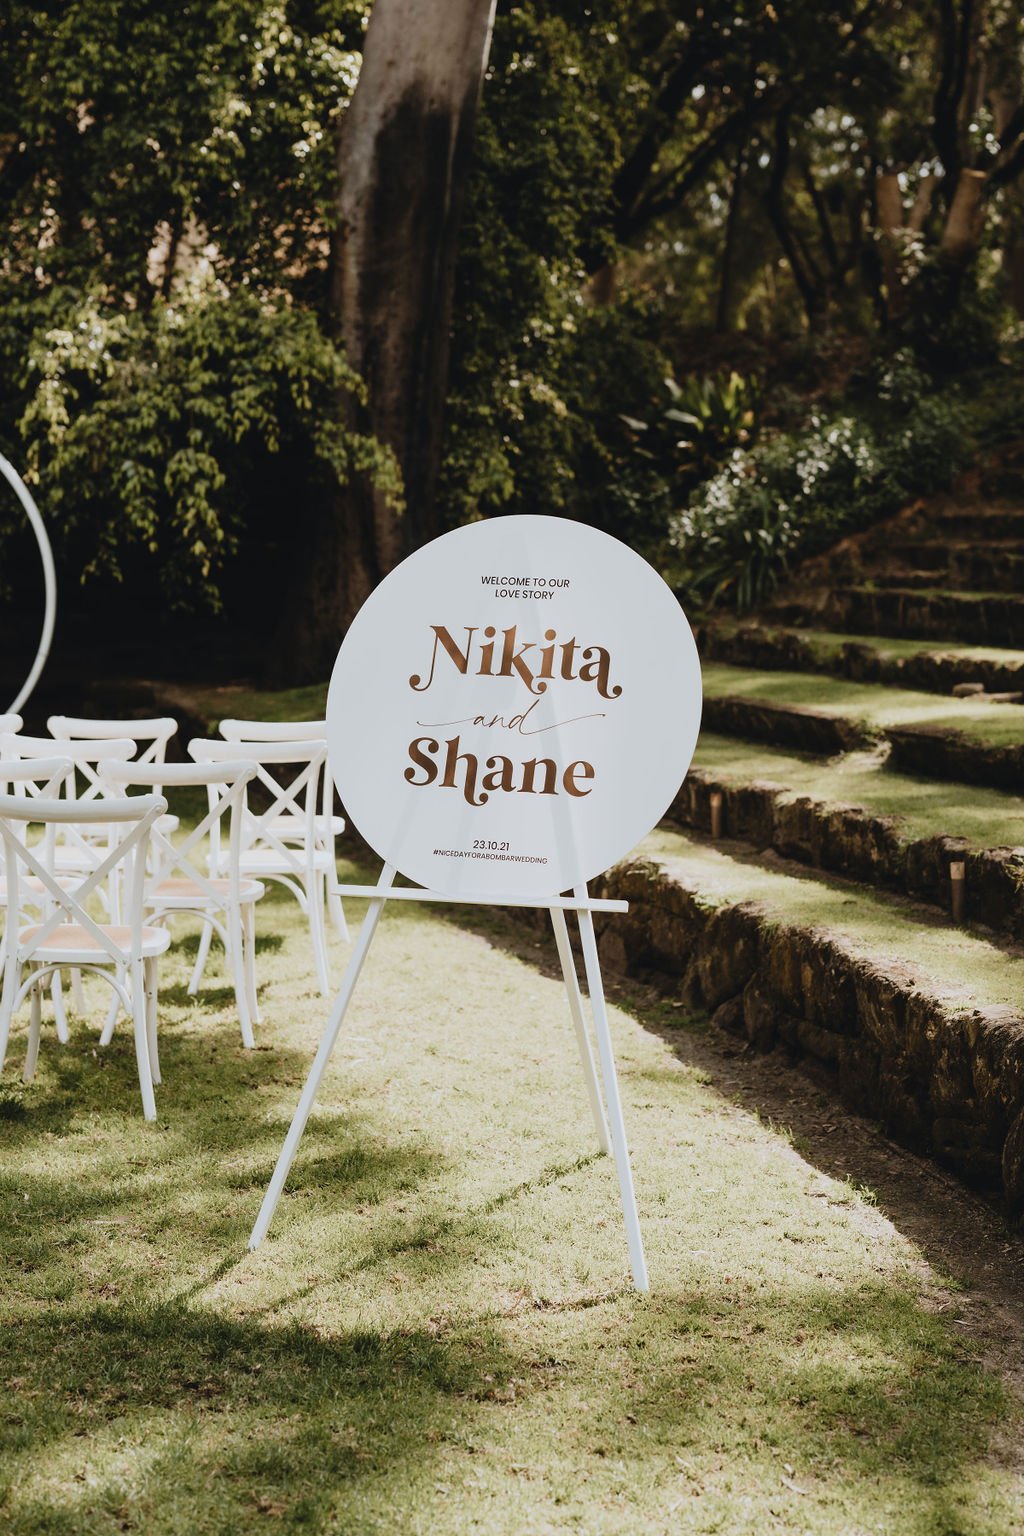 sunken gardens uwa wedding - perth wedding photographerNikita&Shane23.10.21-174.jpg